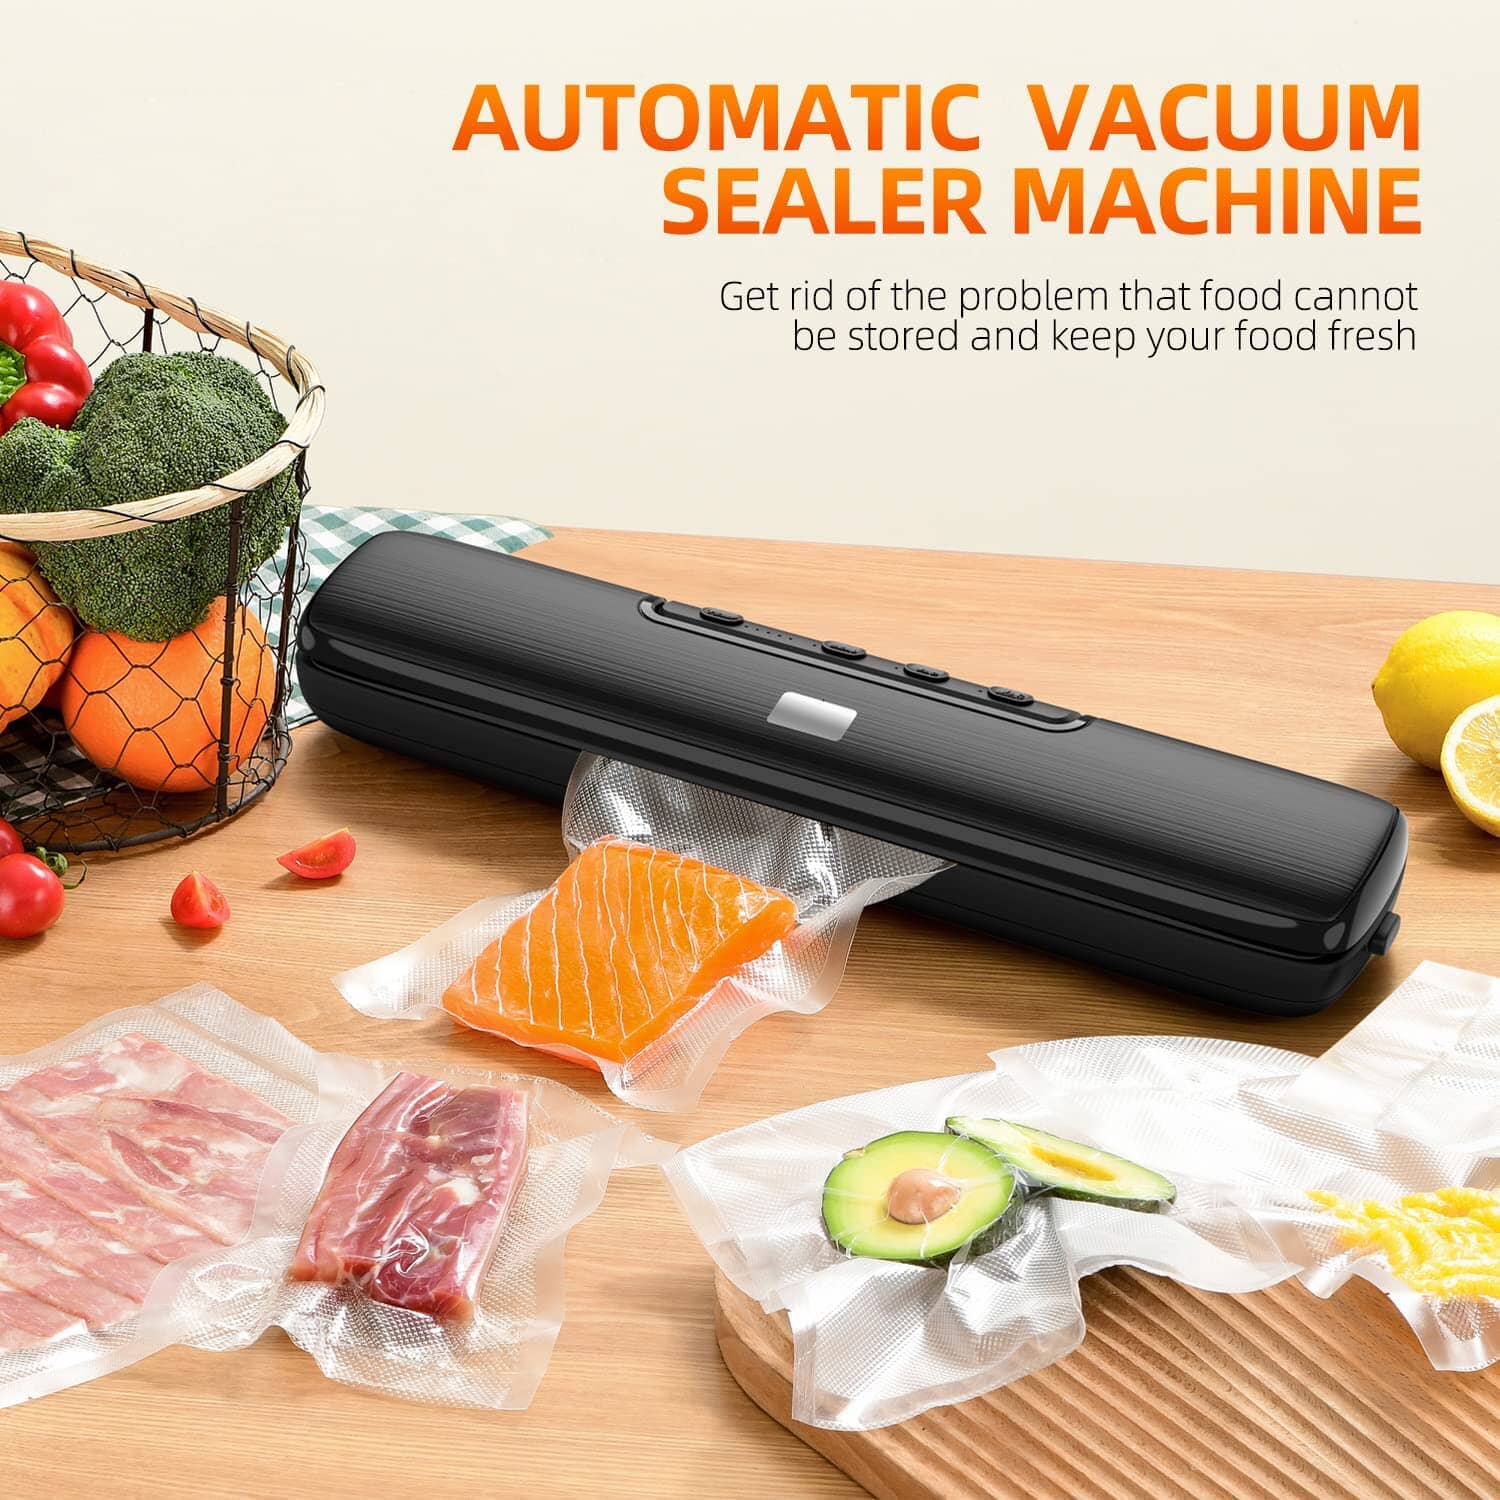 The Mempedont Portable Vacuum Sealers Help Keep Food Fresh